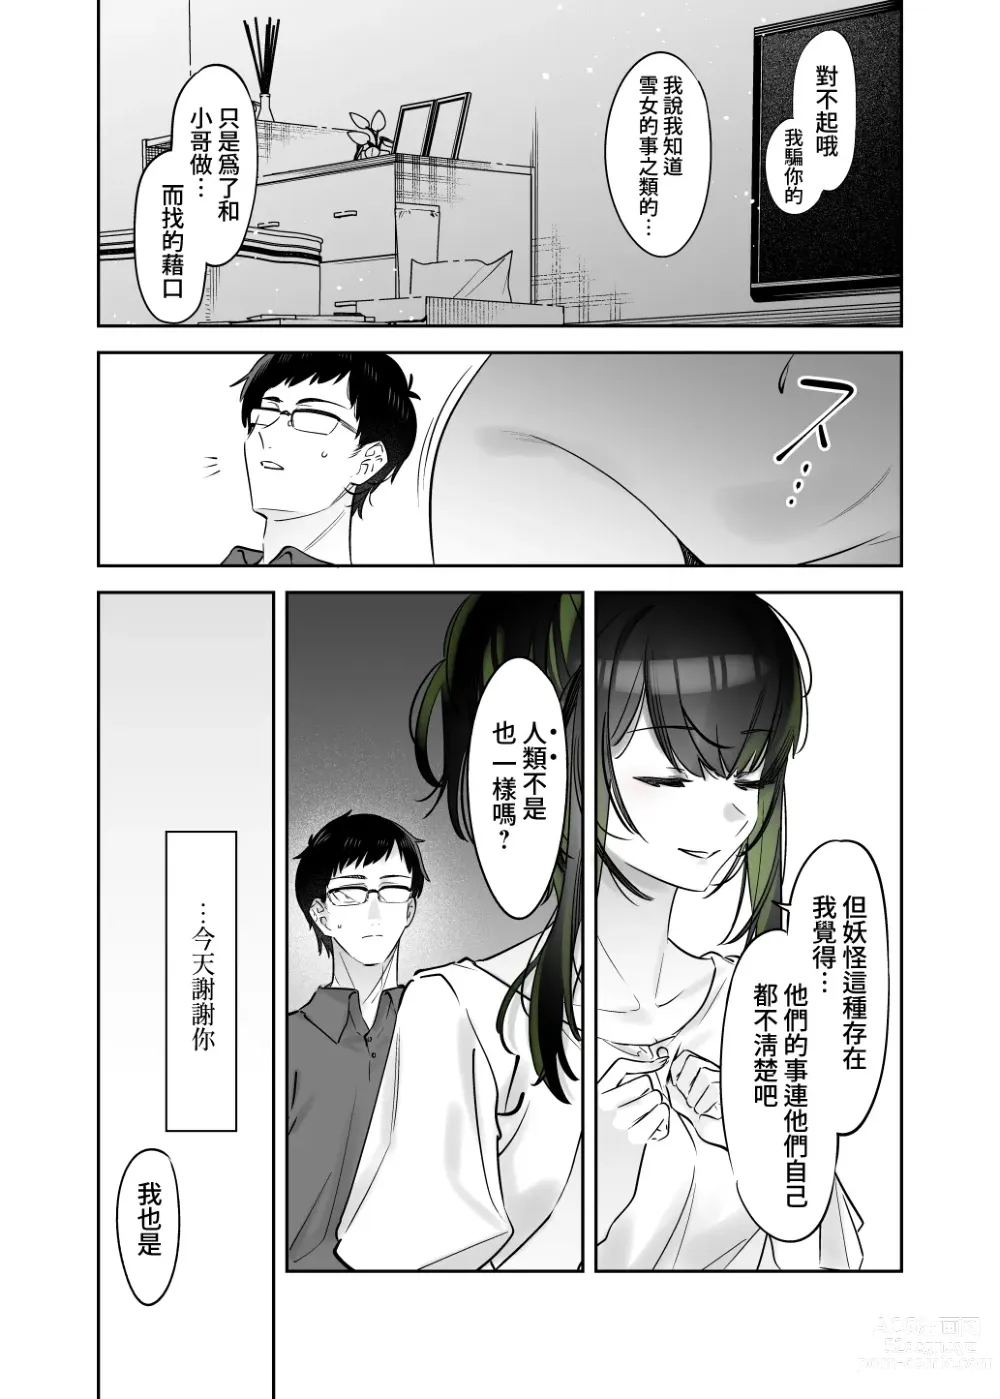 Page 42 of doujinshi 下雪那天路遇的奇怪女孩